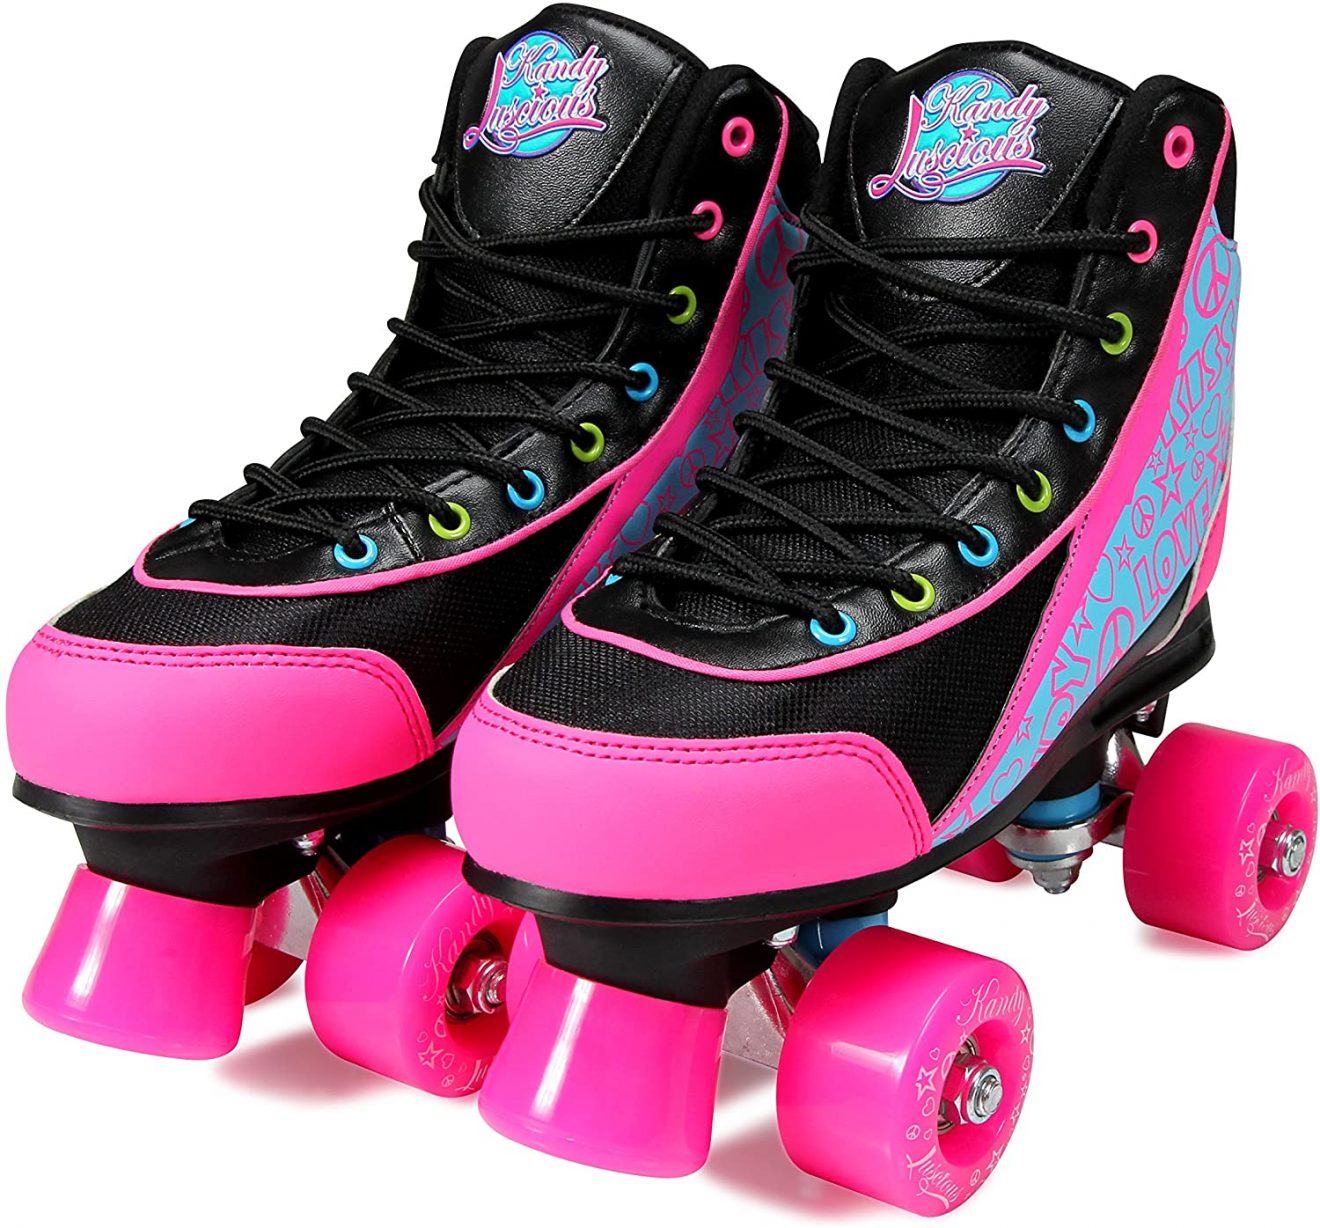 Kandy Luscious Kids Roller Skates 1320x1228 